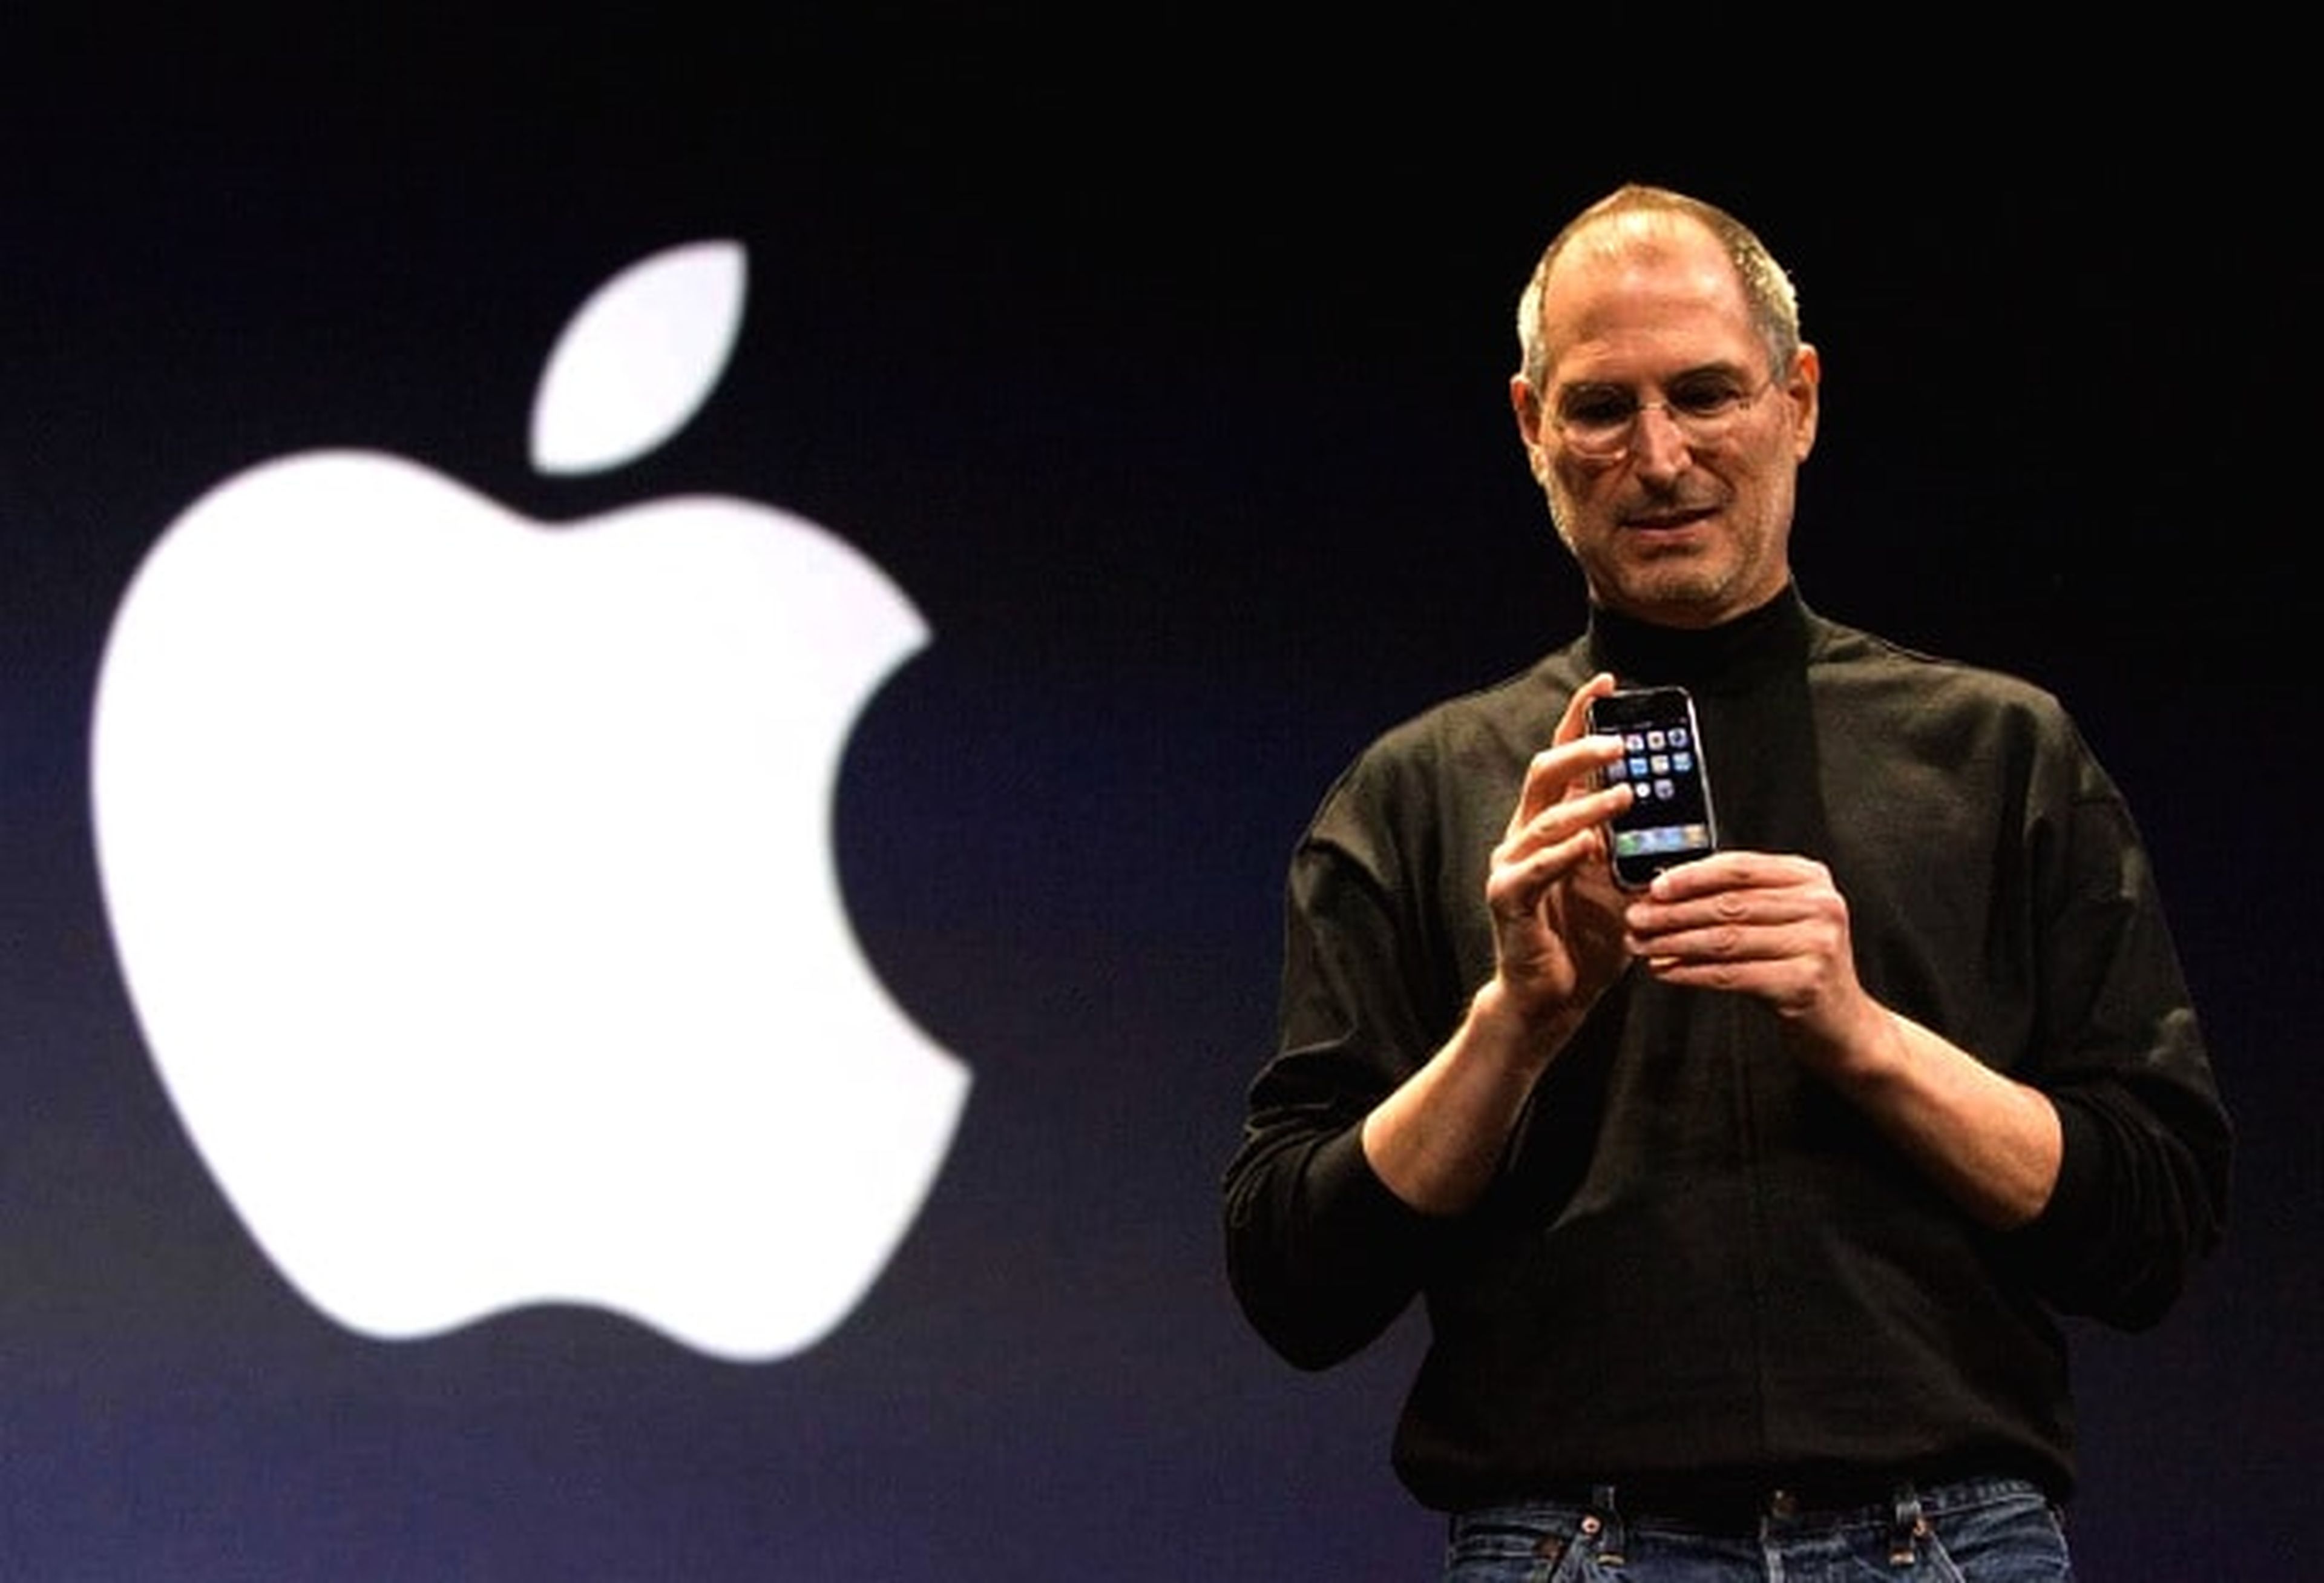 Iphone: Steve Jobs